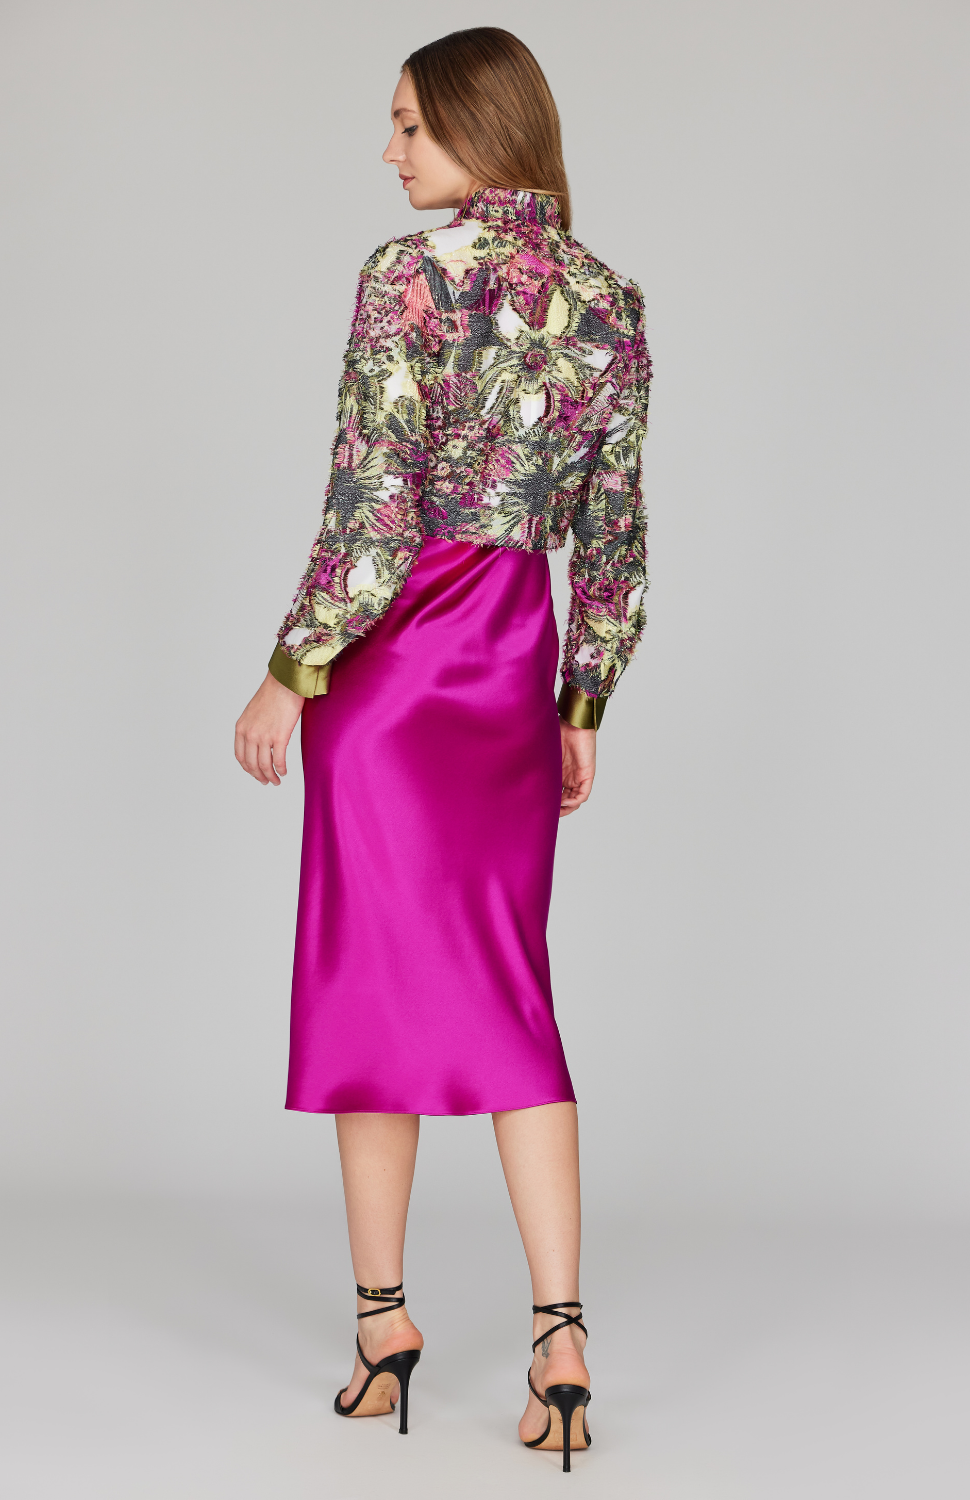 Metallic Floral Eyelash Short Jacket w/ Satin Contrast